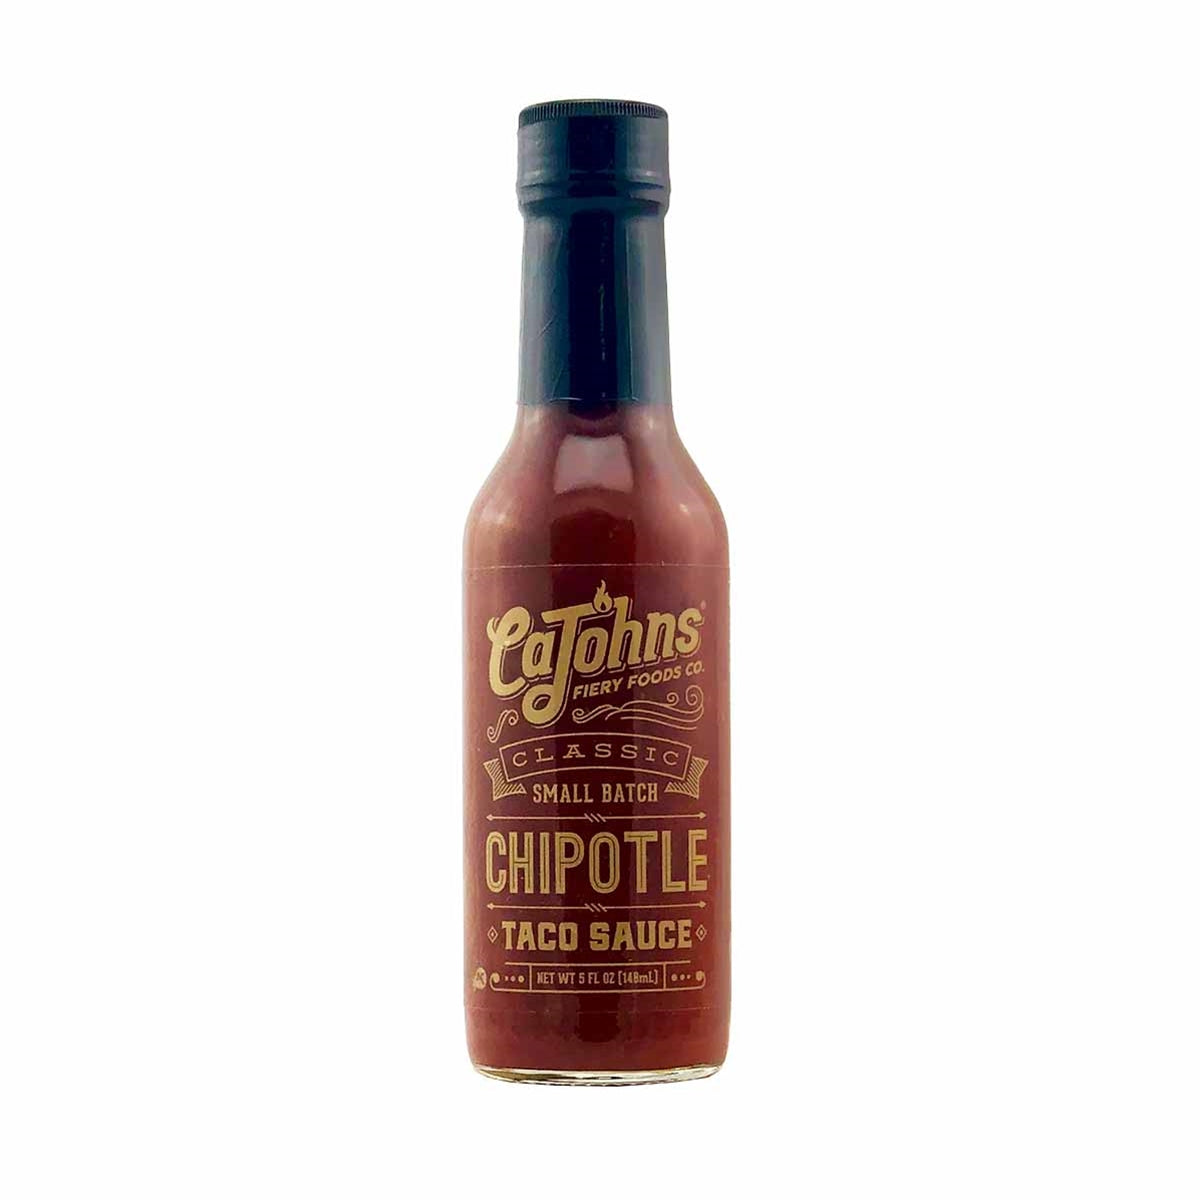 CaJohns Classic Chipotle Taco Sauce